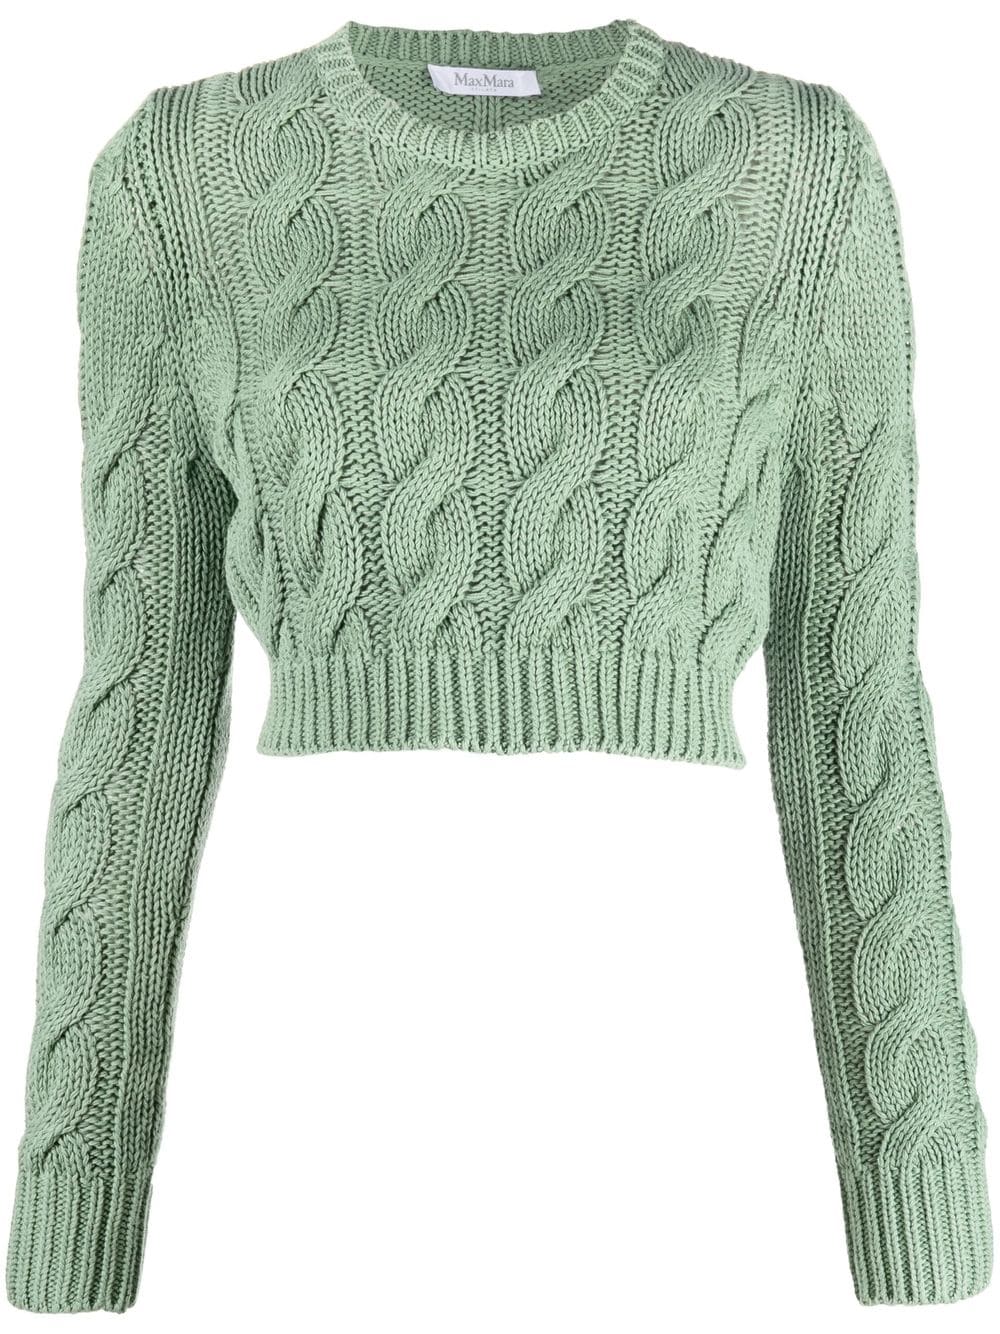 Max Mara cable-knit cropped top - Green von Max Mara